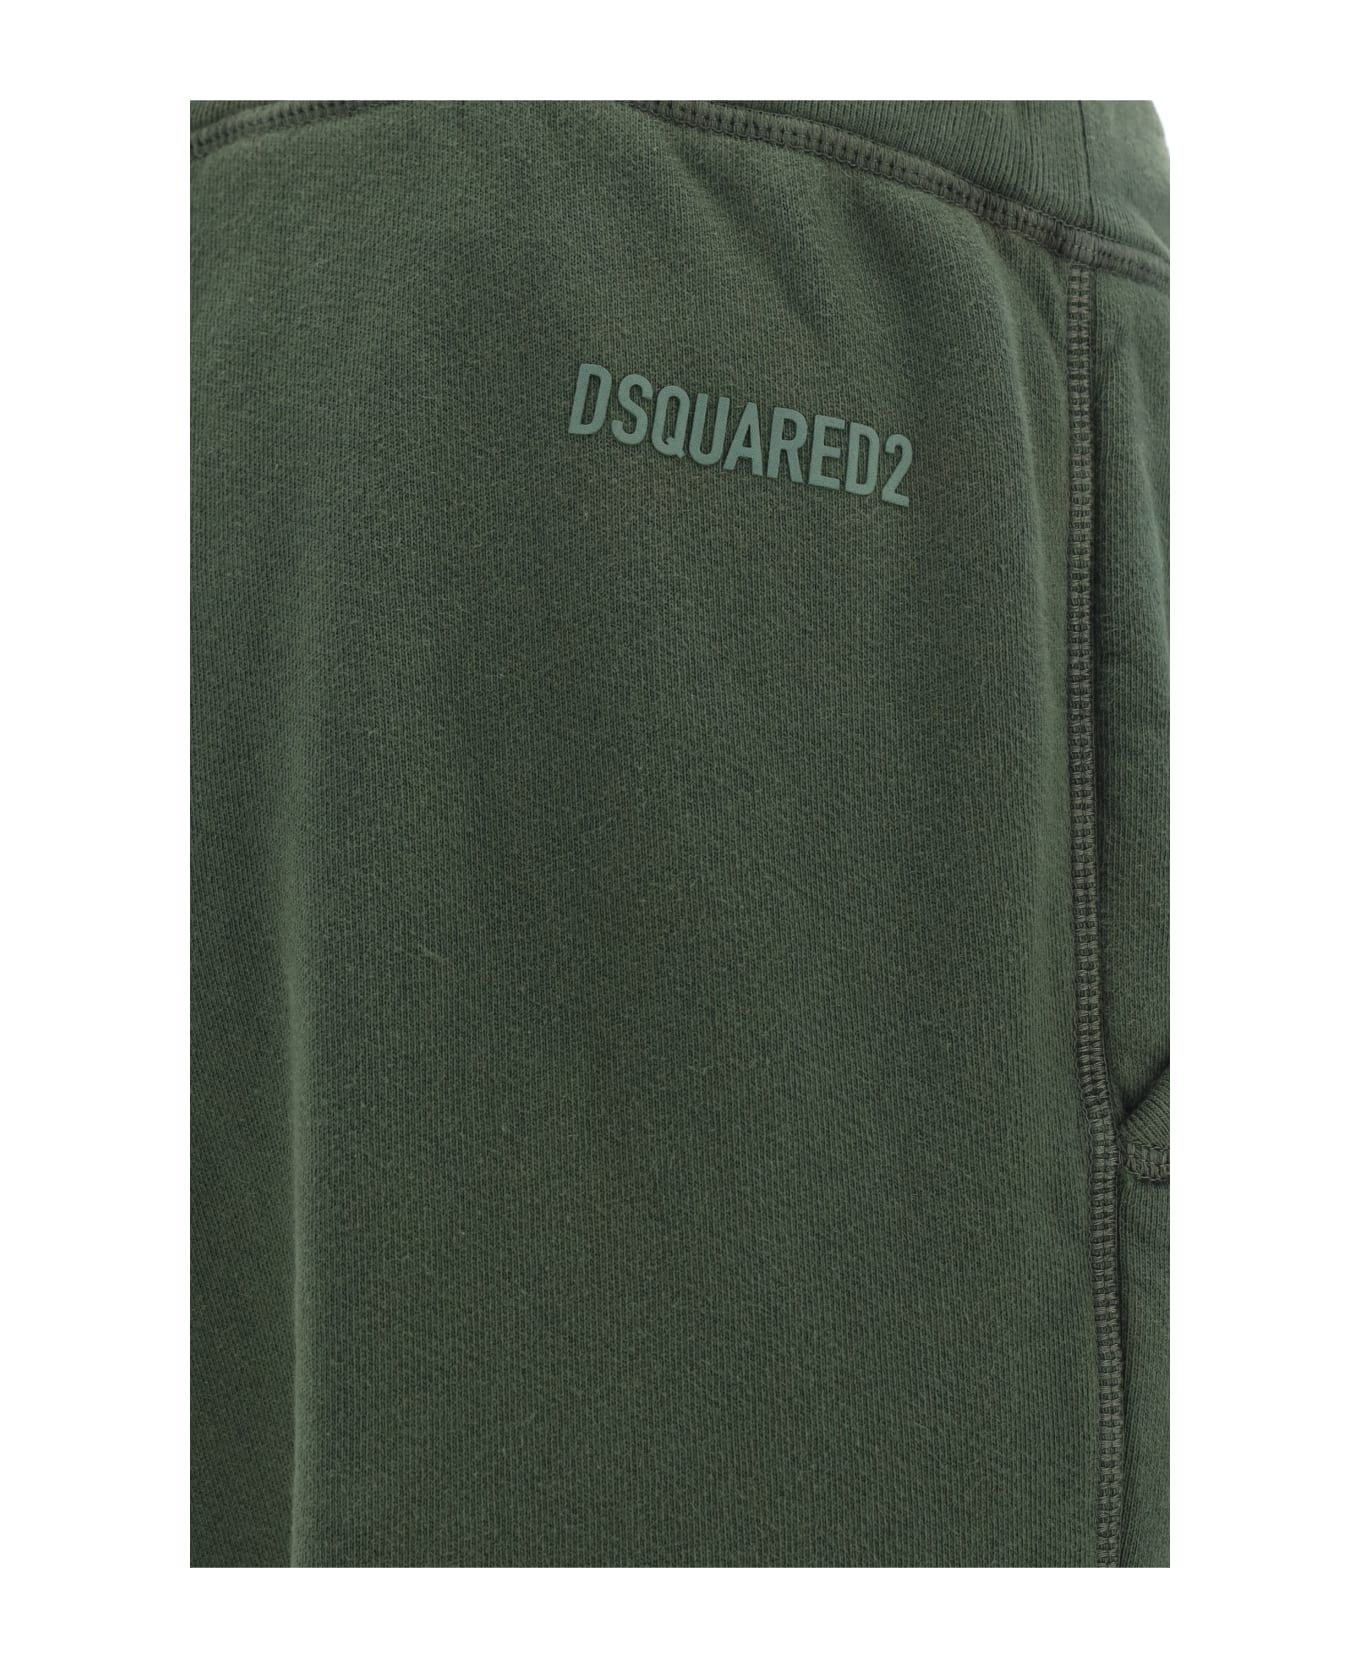 Dsquared2 Sweatpants - Military Green スウェットパンツ